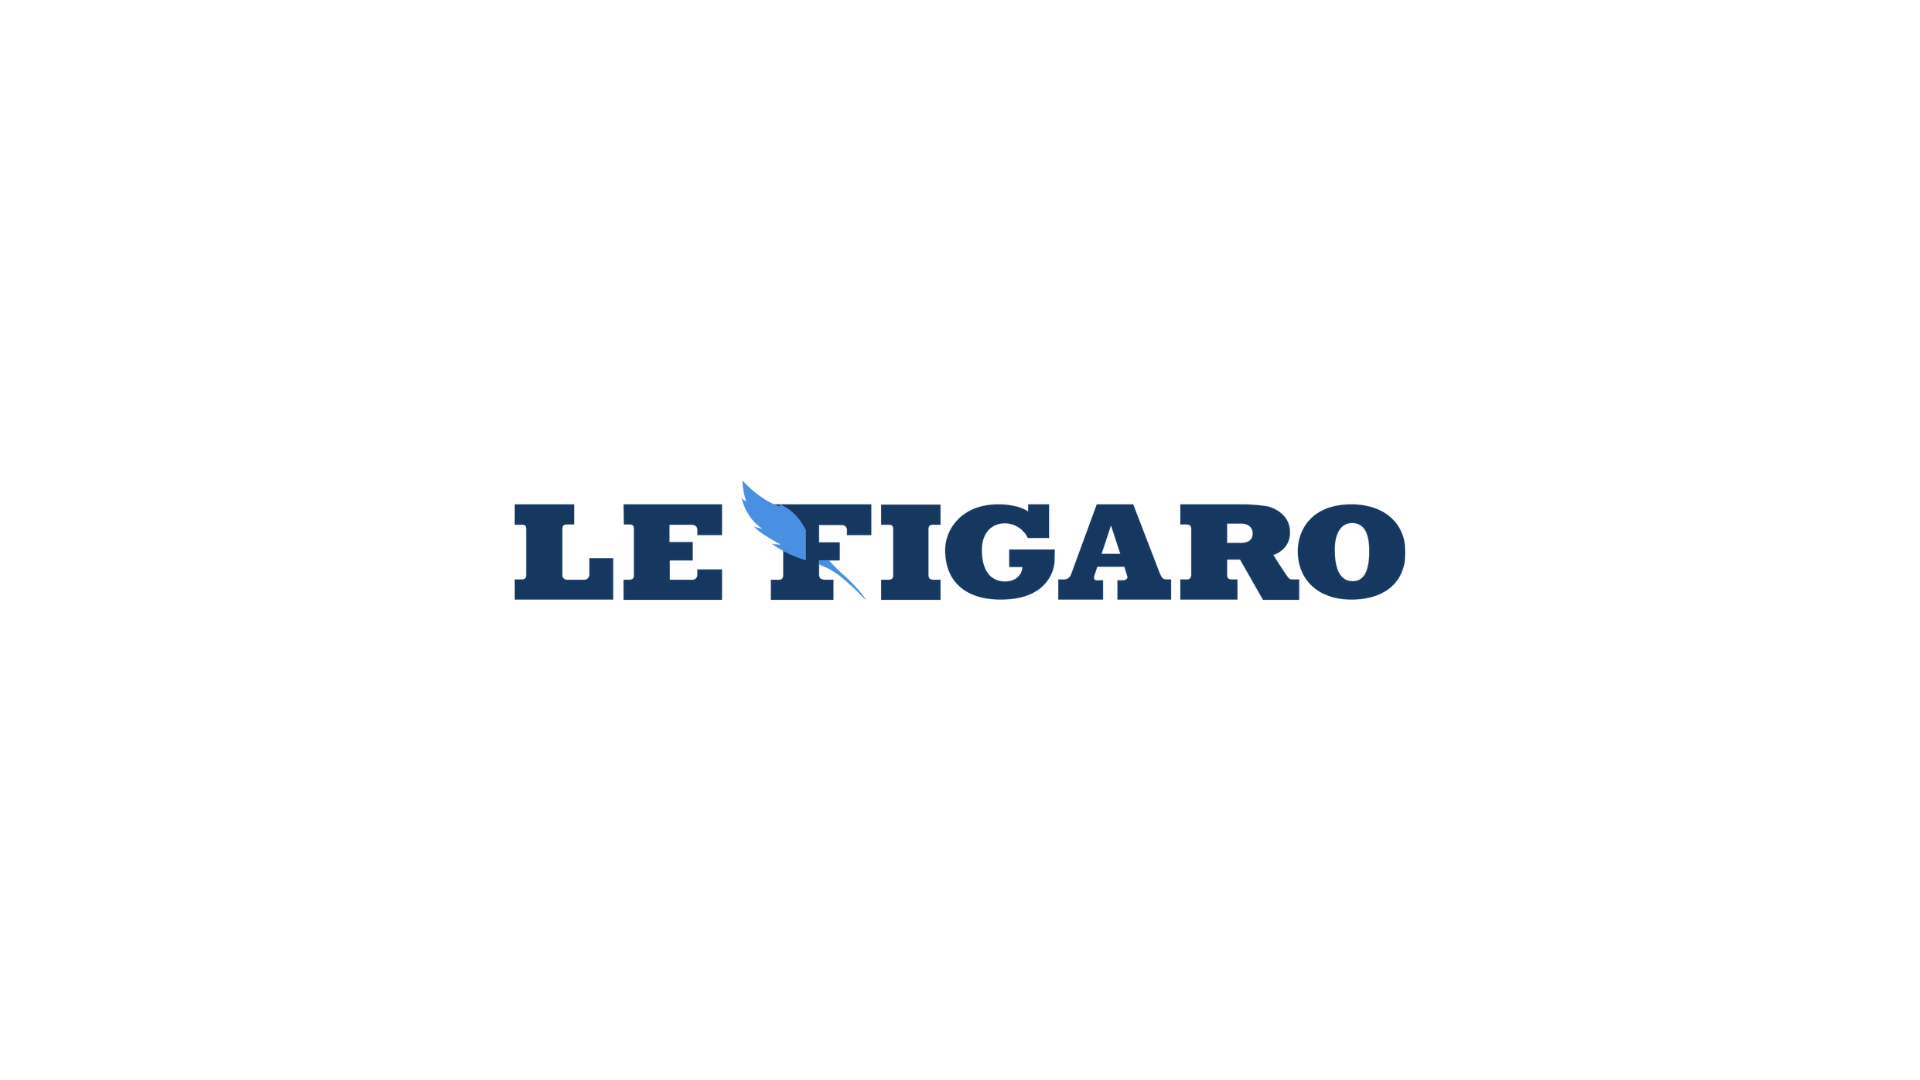 Article Le Figaro - BeTomorrow